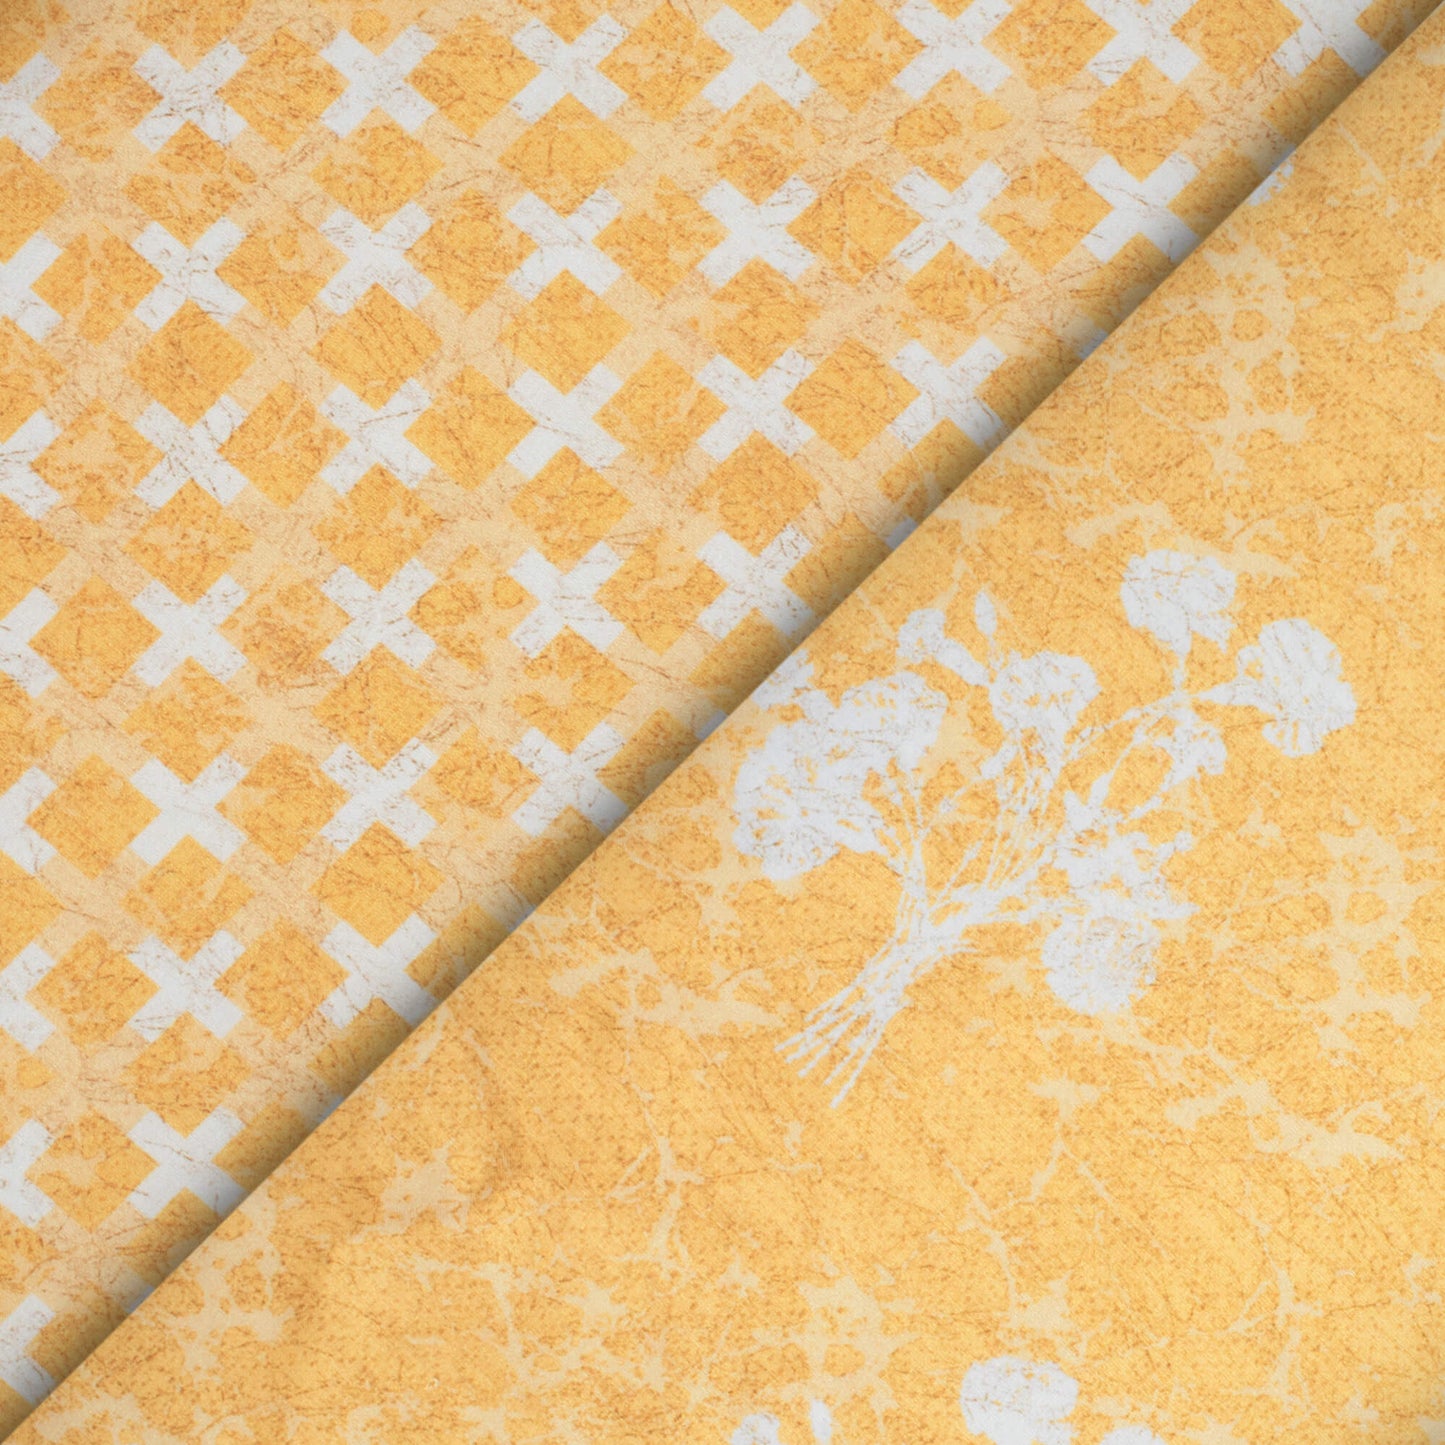 Trombone Yellow And White Geometric Pattern Digital Print Premium Lush Satin Fabric